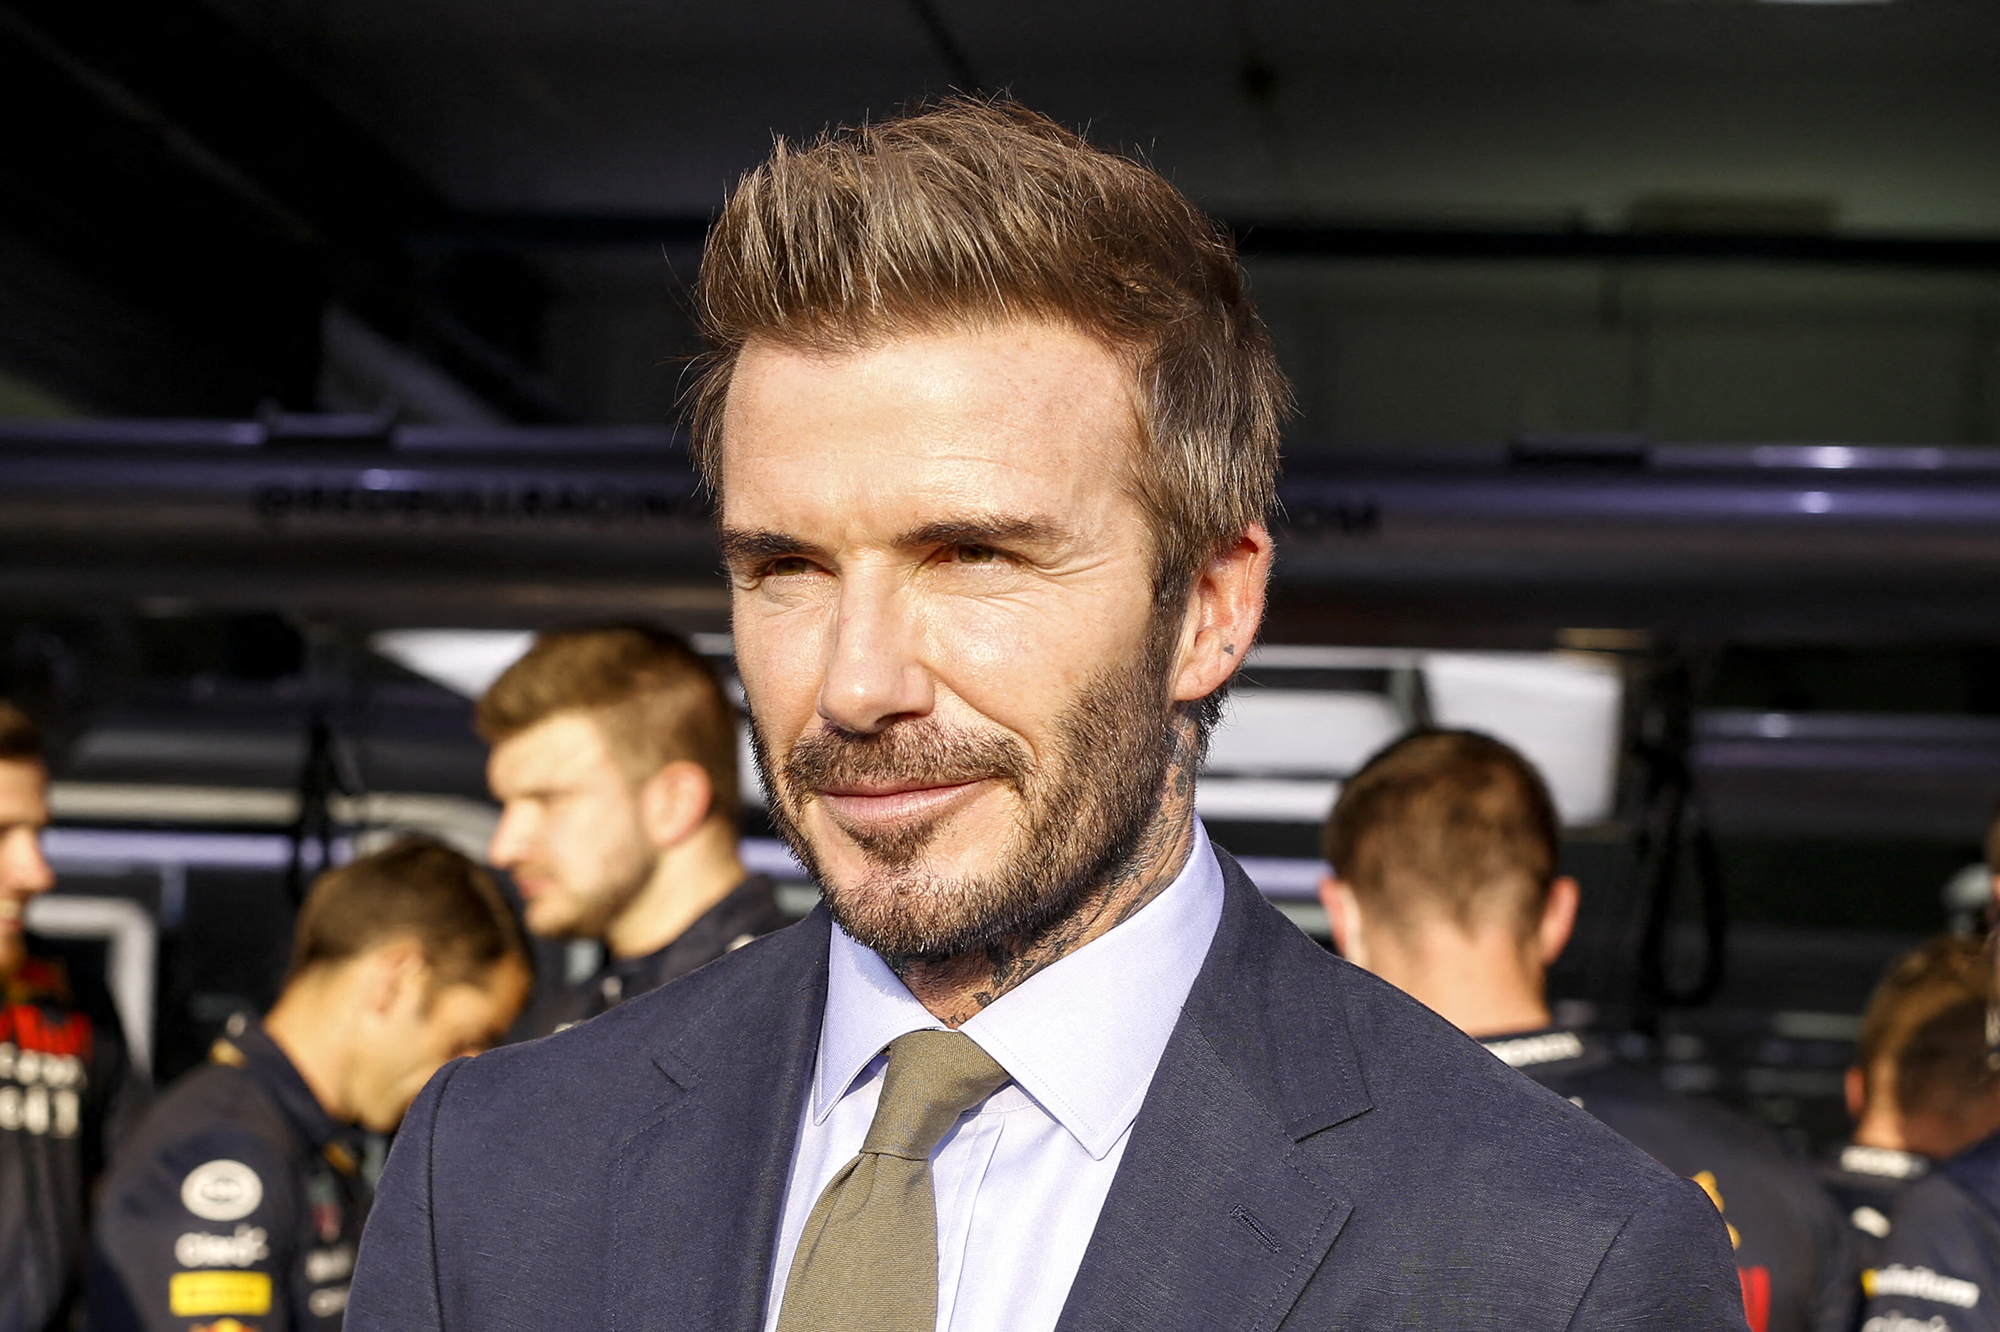 David Beckham entrusted his Instagram account to a Ukrainian doctor